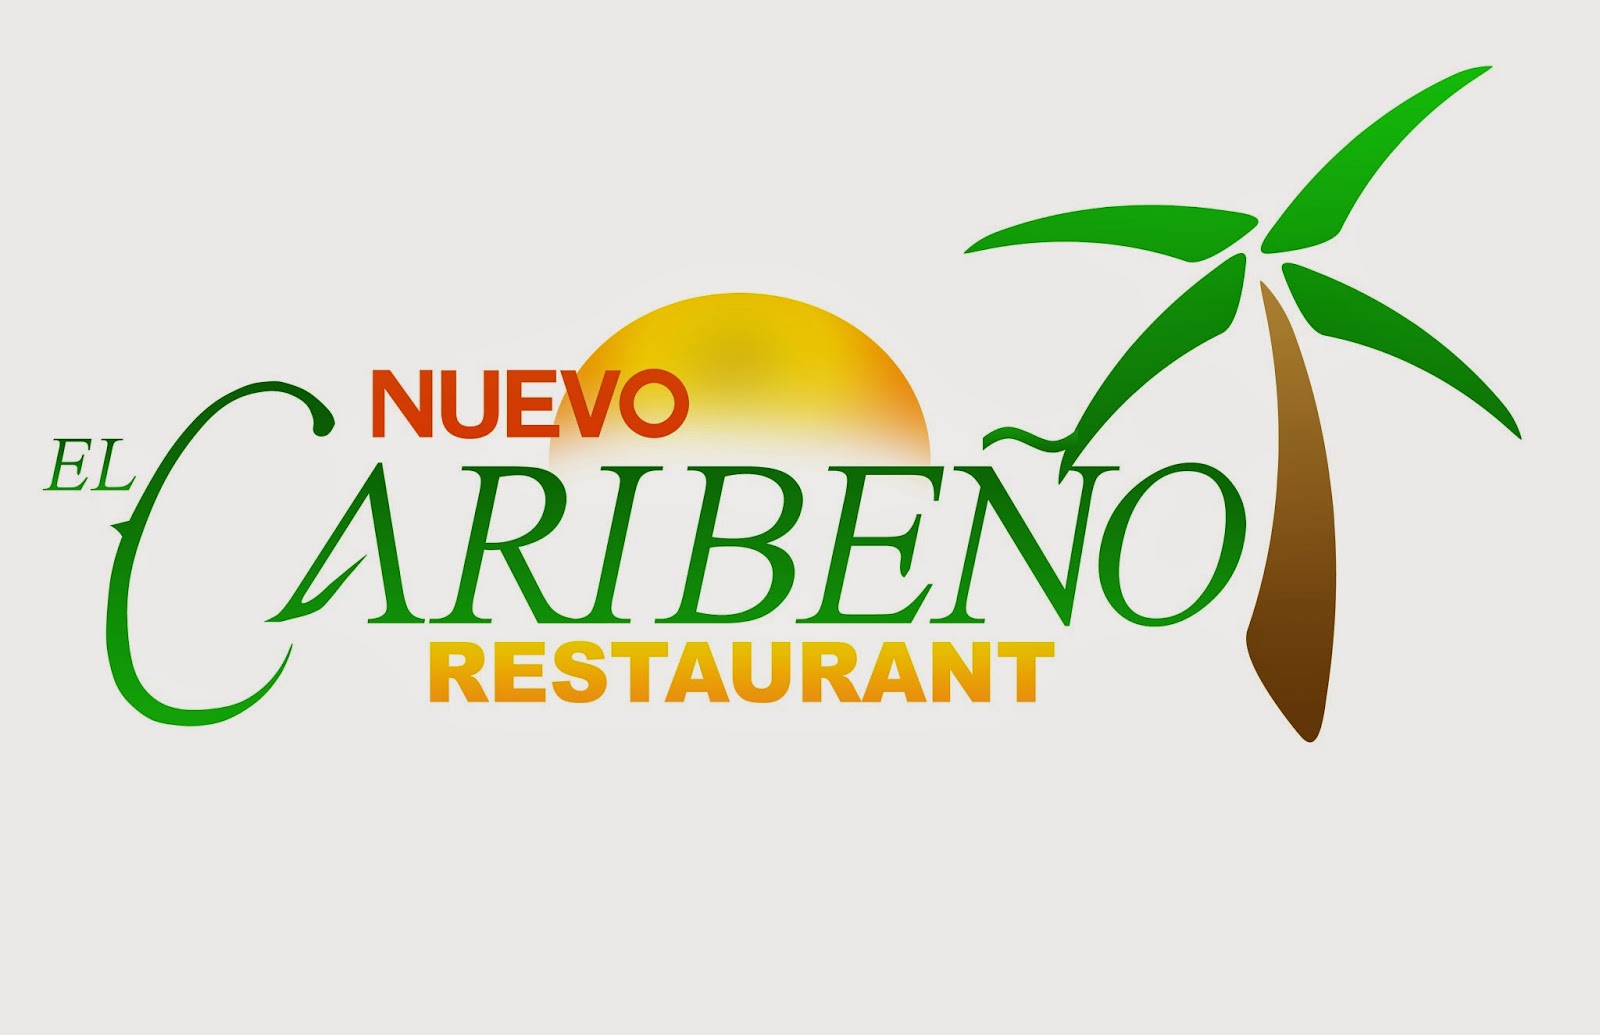 Photo of El Nuevo Caribeño in New York City, New York, United States - 8 Picture of Restaurant, Food, Point of interest, Establishment